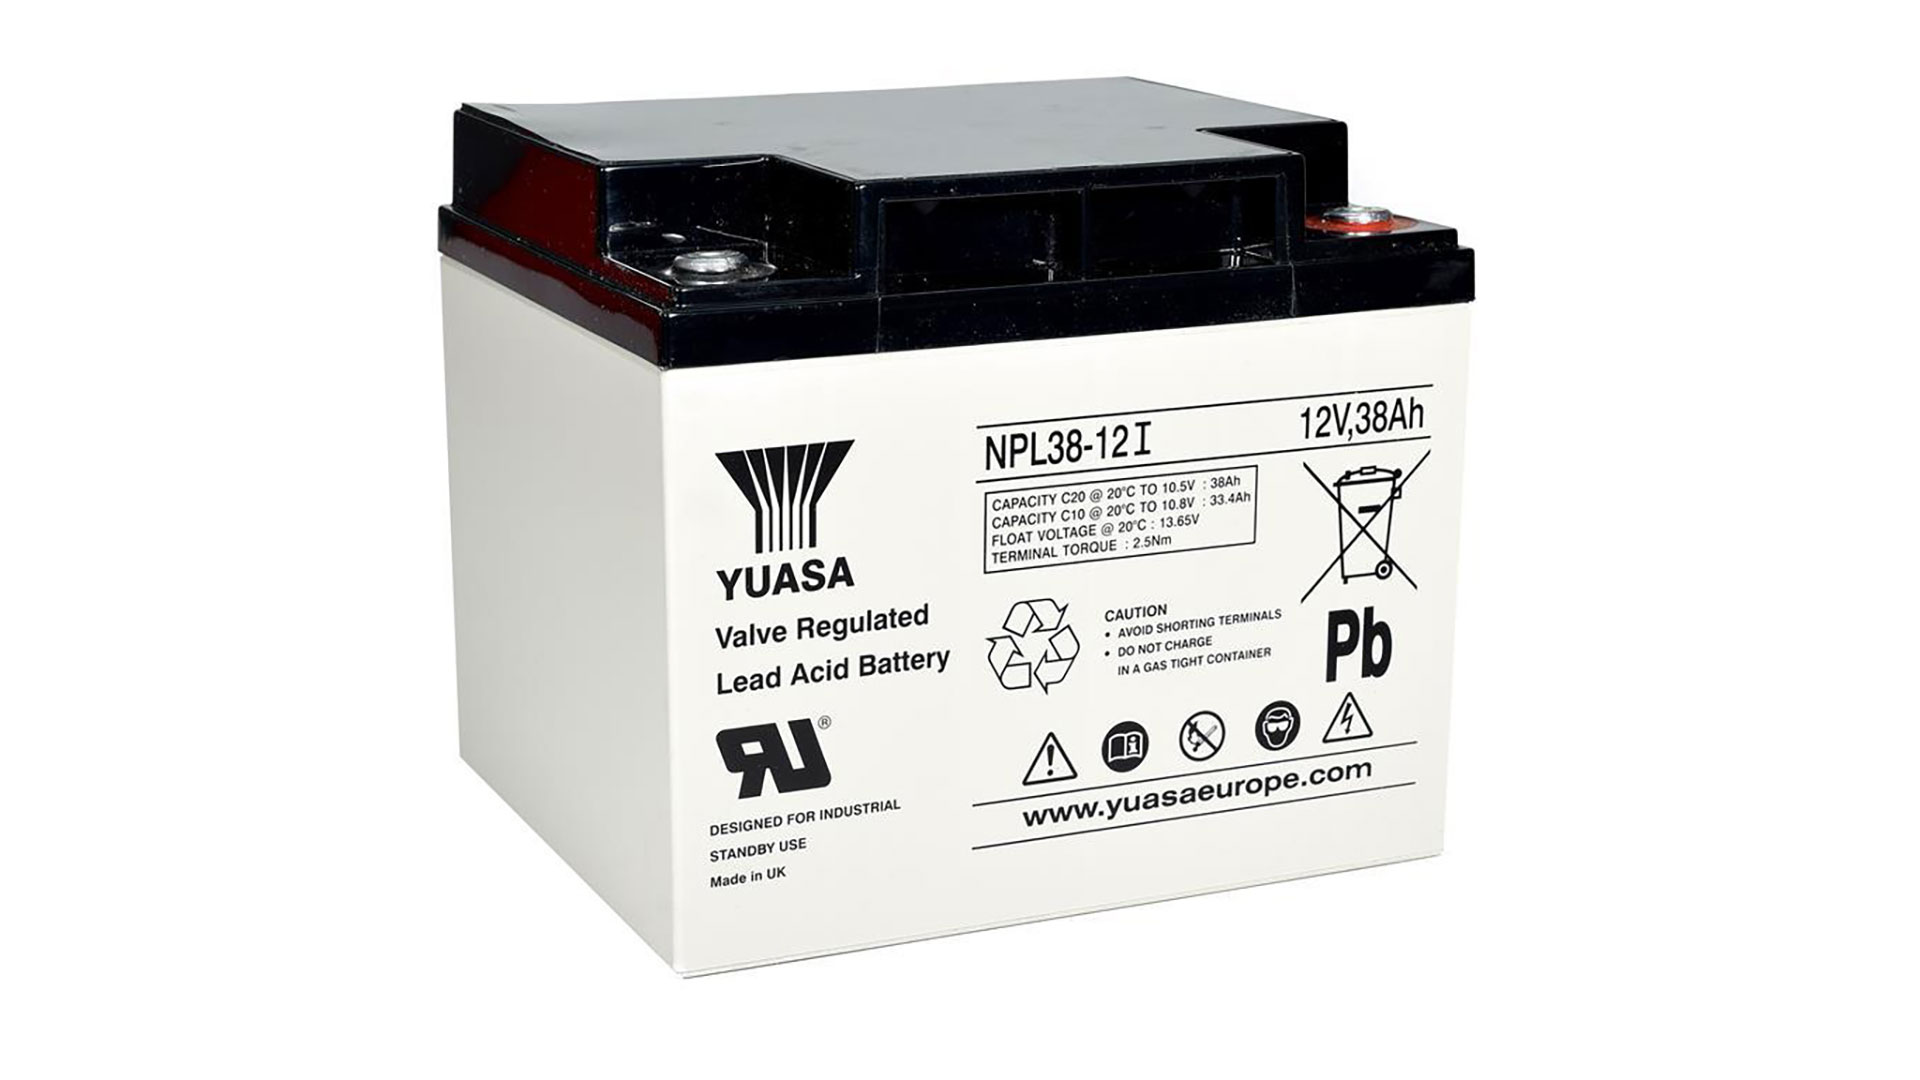 NPL38-12I (12V 38Ah) Yuasa General Purpose VRLA Battery